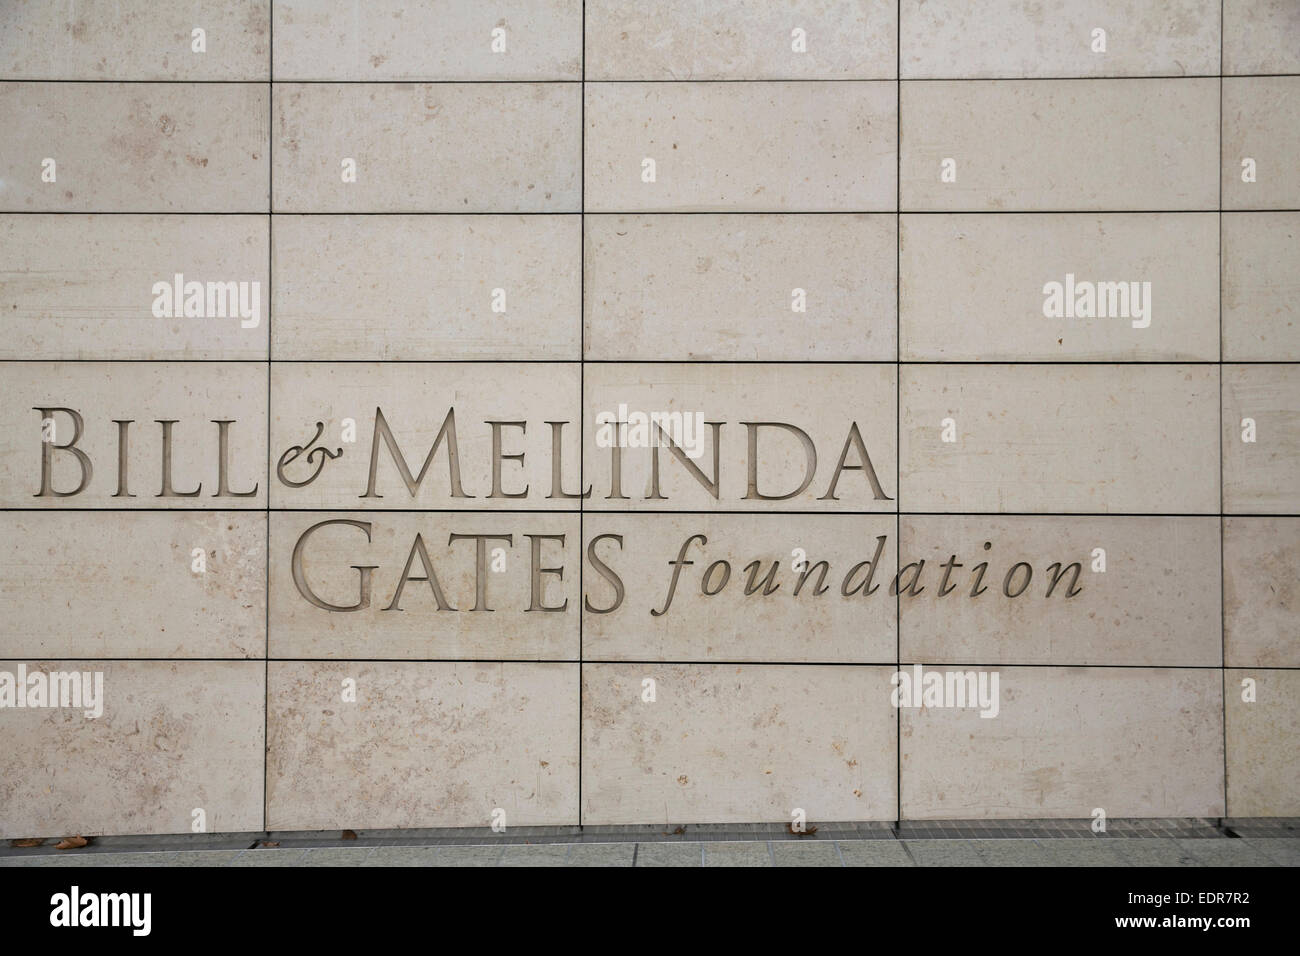 The headquarters of the Bill & Melinda Gates Foundation in Seattle, Washington. Stock Photo